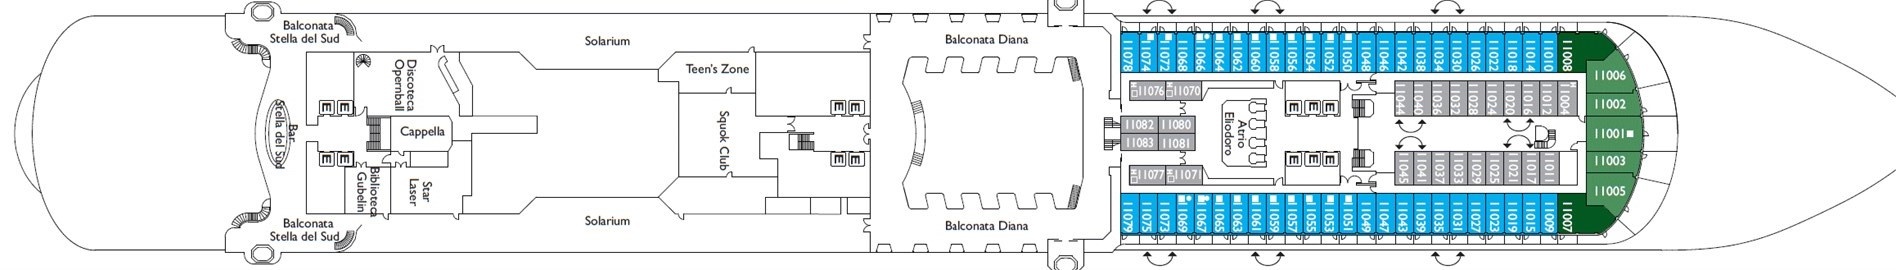 Планы палуб Costa Diadema: Deck 11 Timur